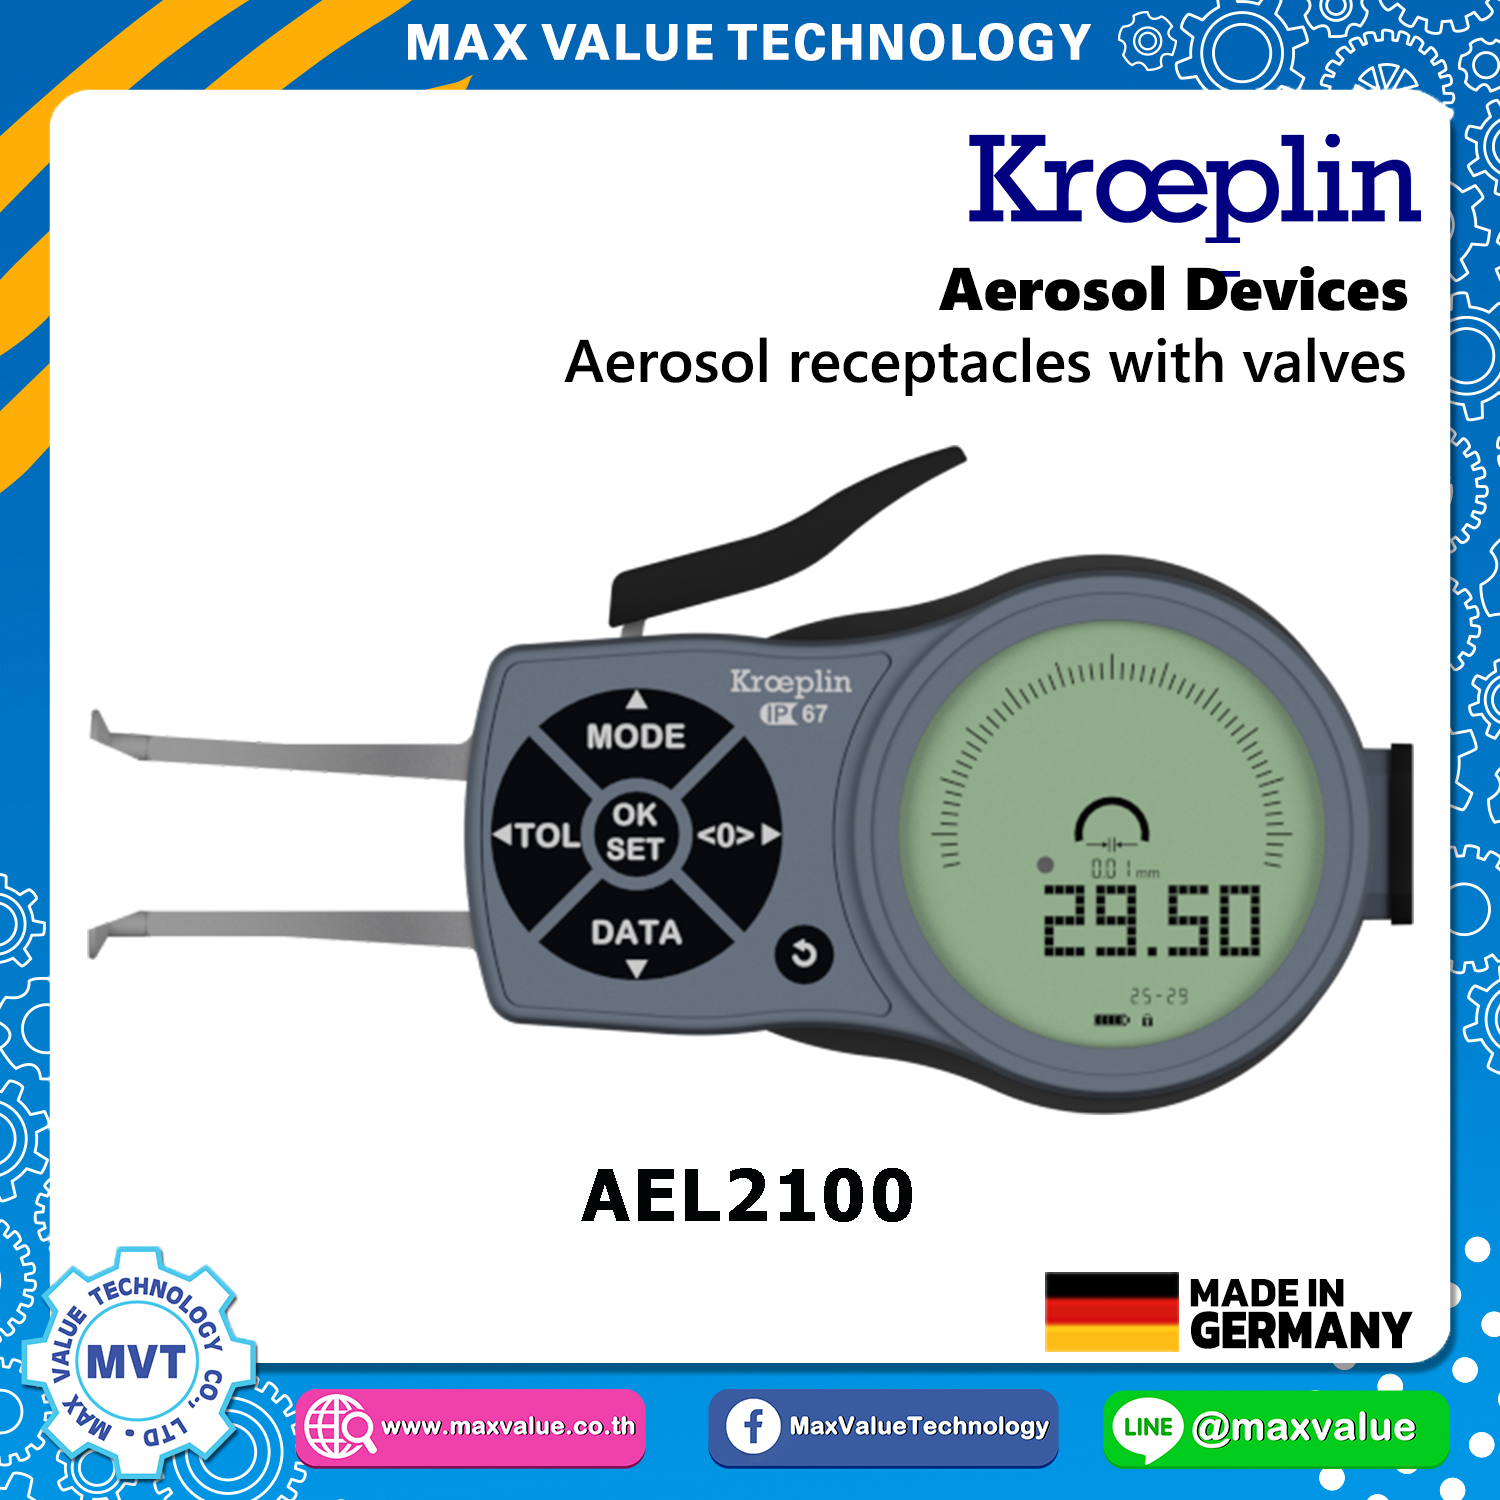 A2100/AEL2100 - Aerosol devices - Aerosol receptacles with valves